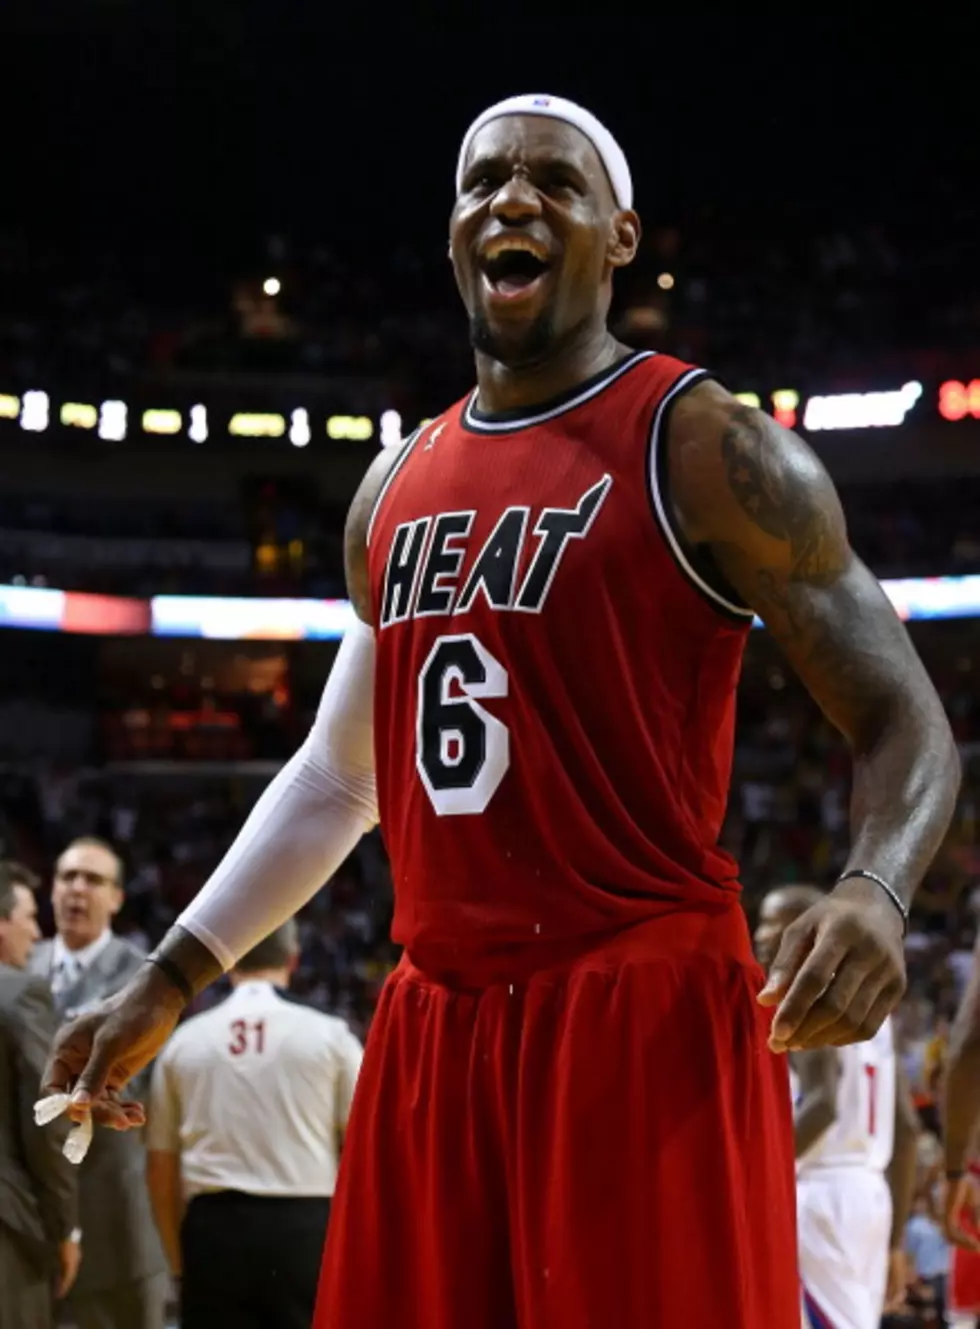 Sports Update – Lebron Scoring Big in the NBA, NCAA Updates & More